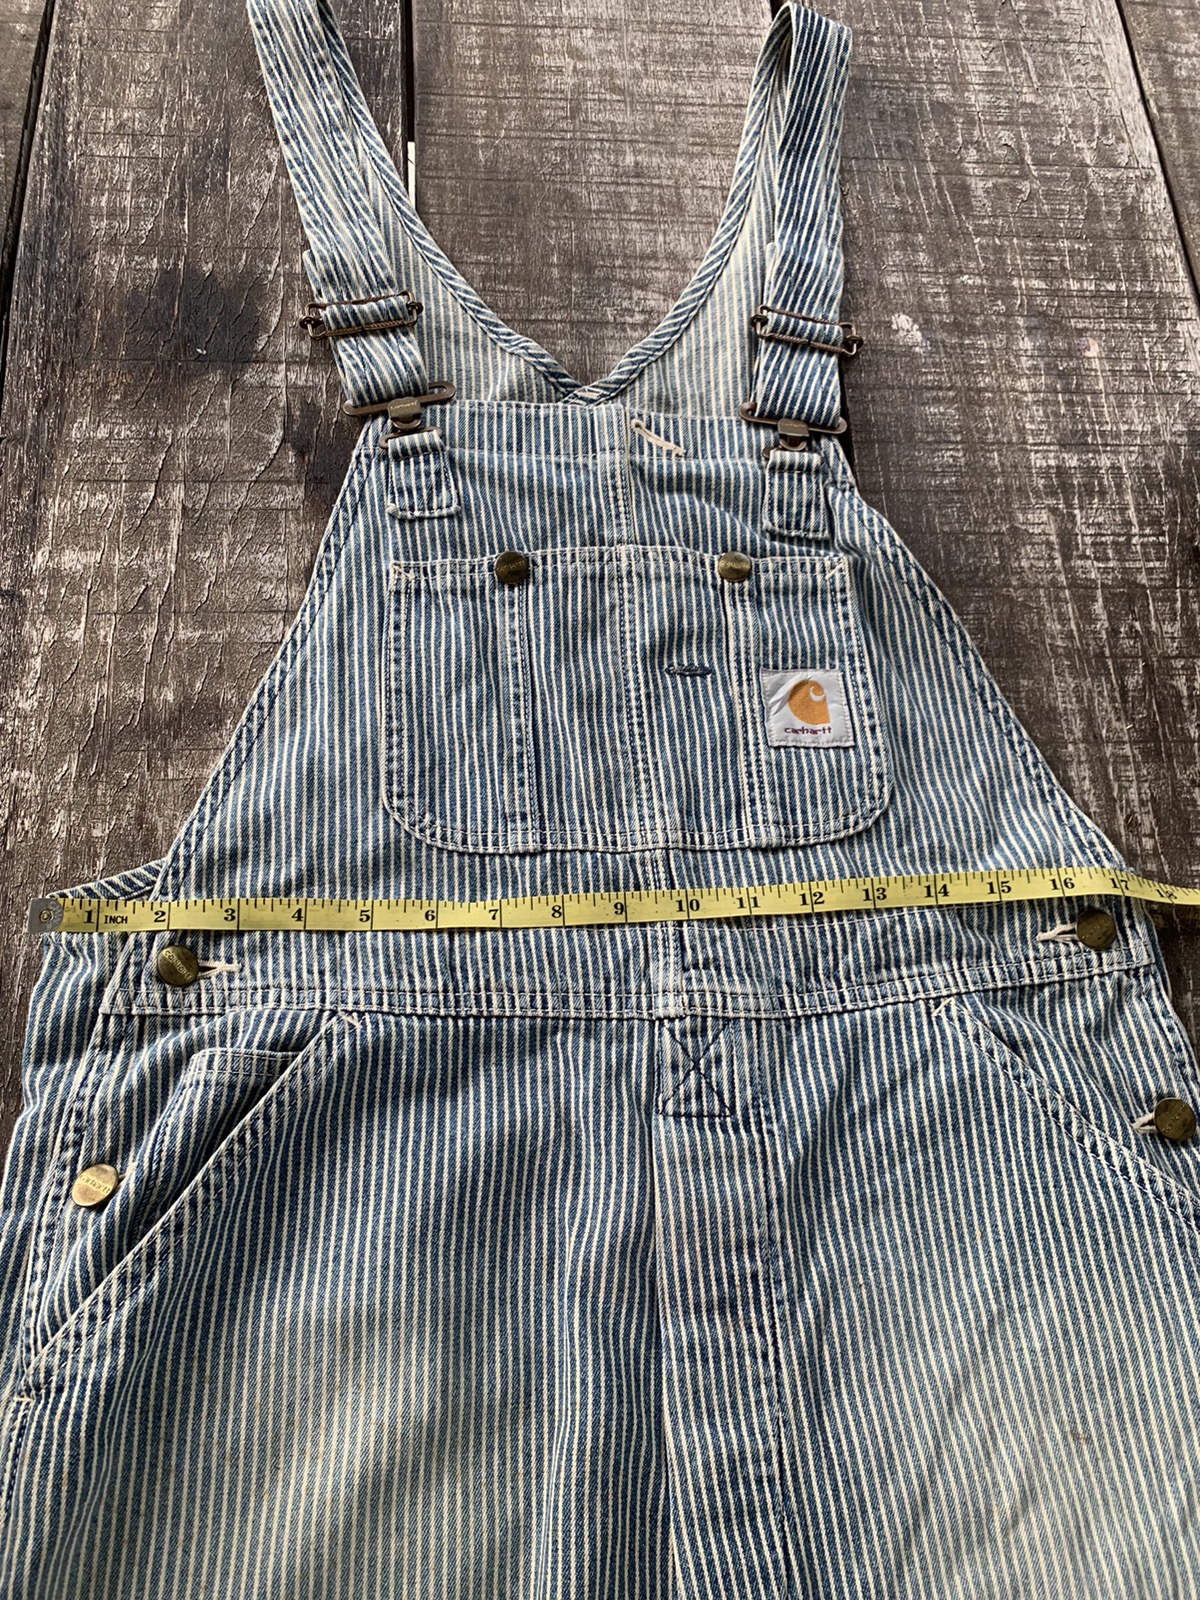 Vintage - RARE 💥 carhatt overalls nice design - 14